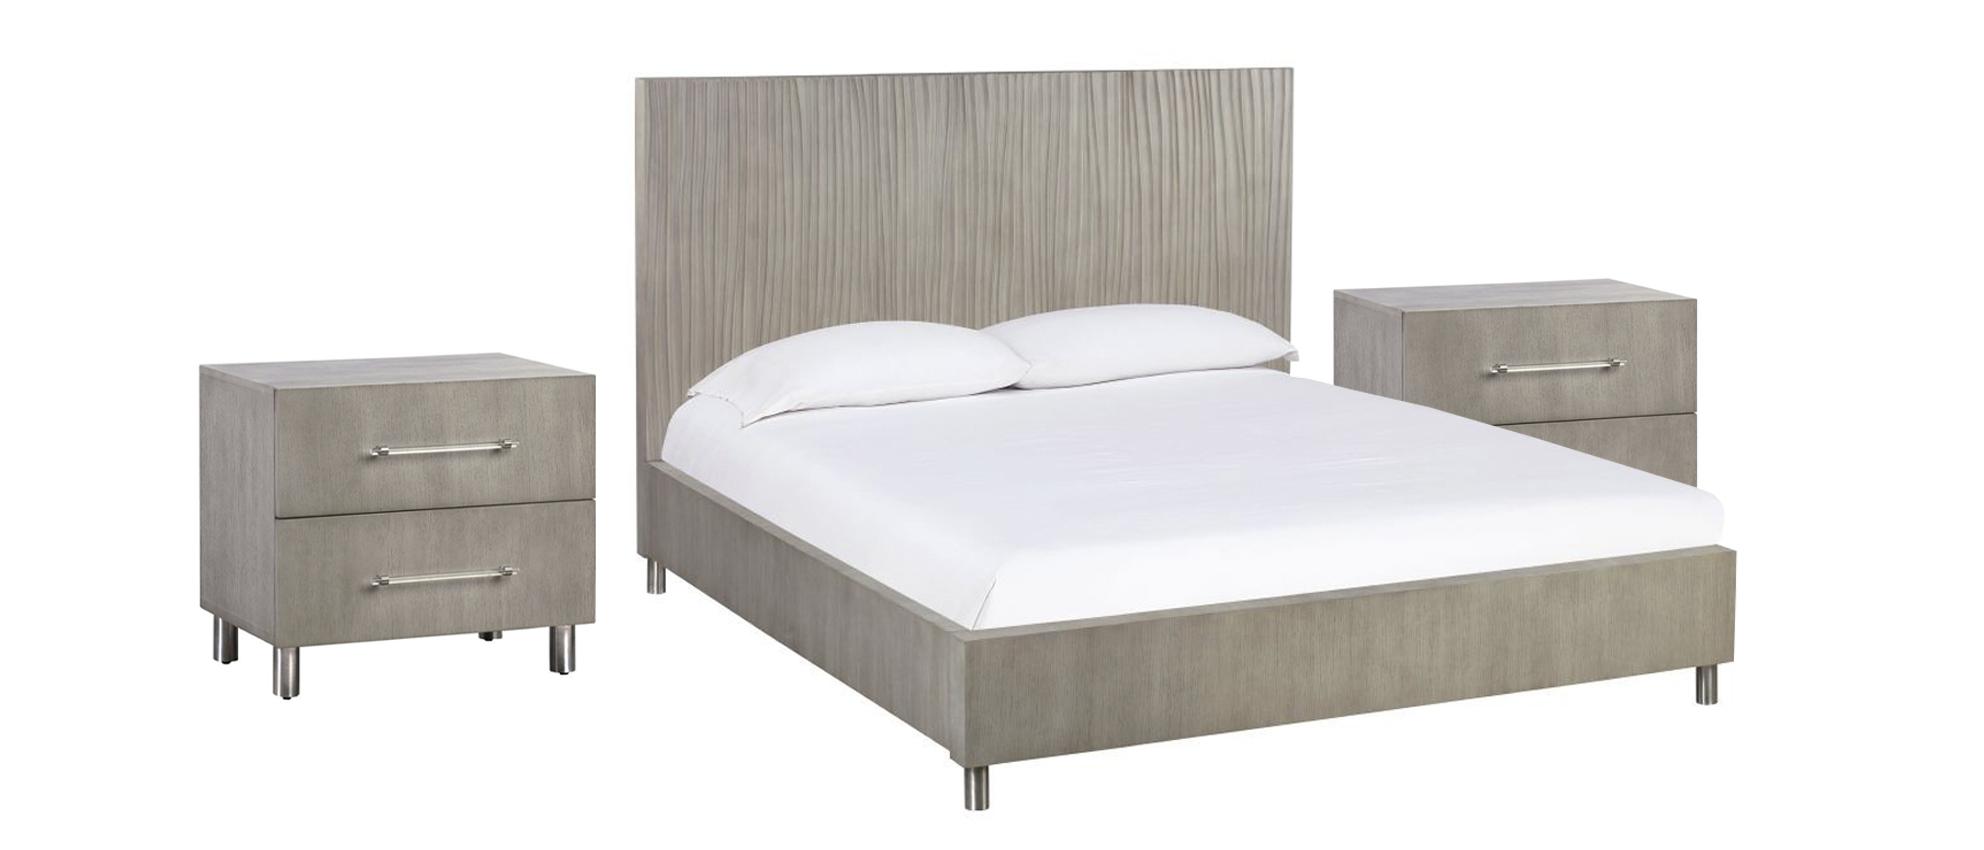 Contemporary Platform Bedroom Set ARGENTO 9DM8H7-2N-3PC in Gray 